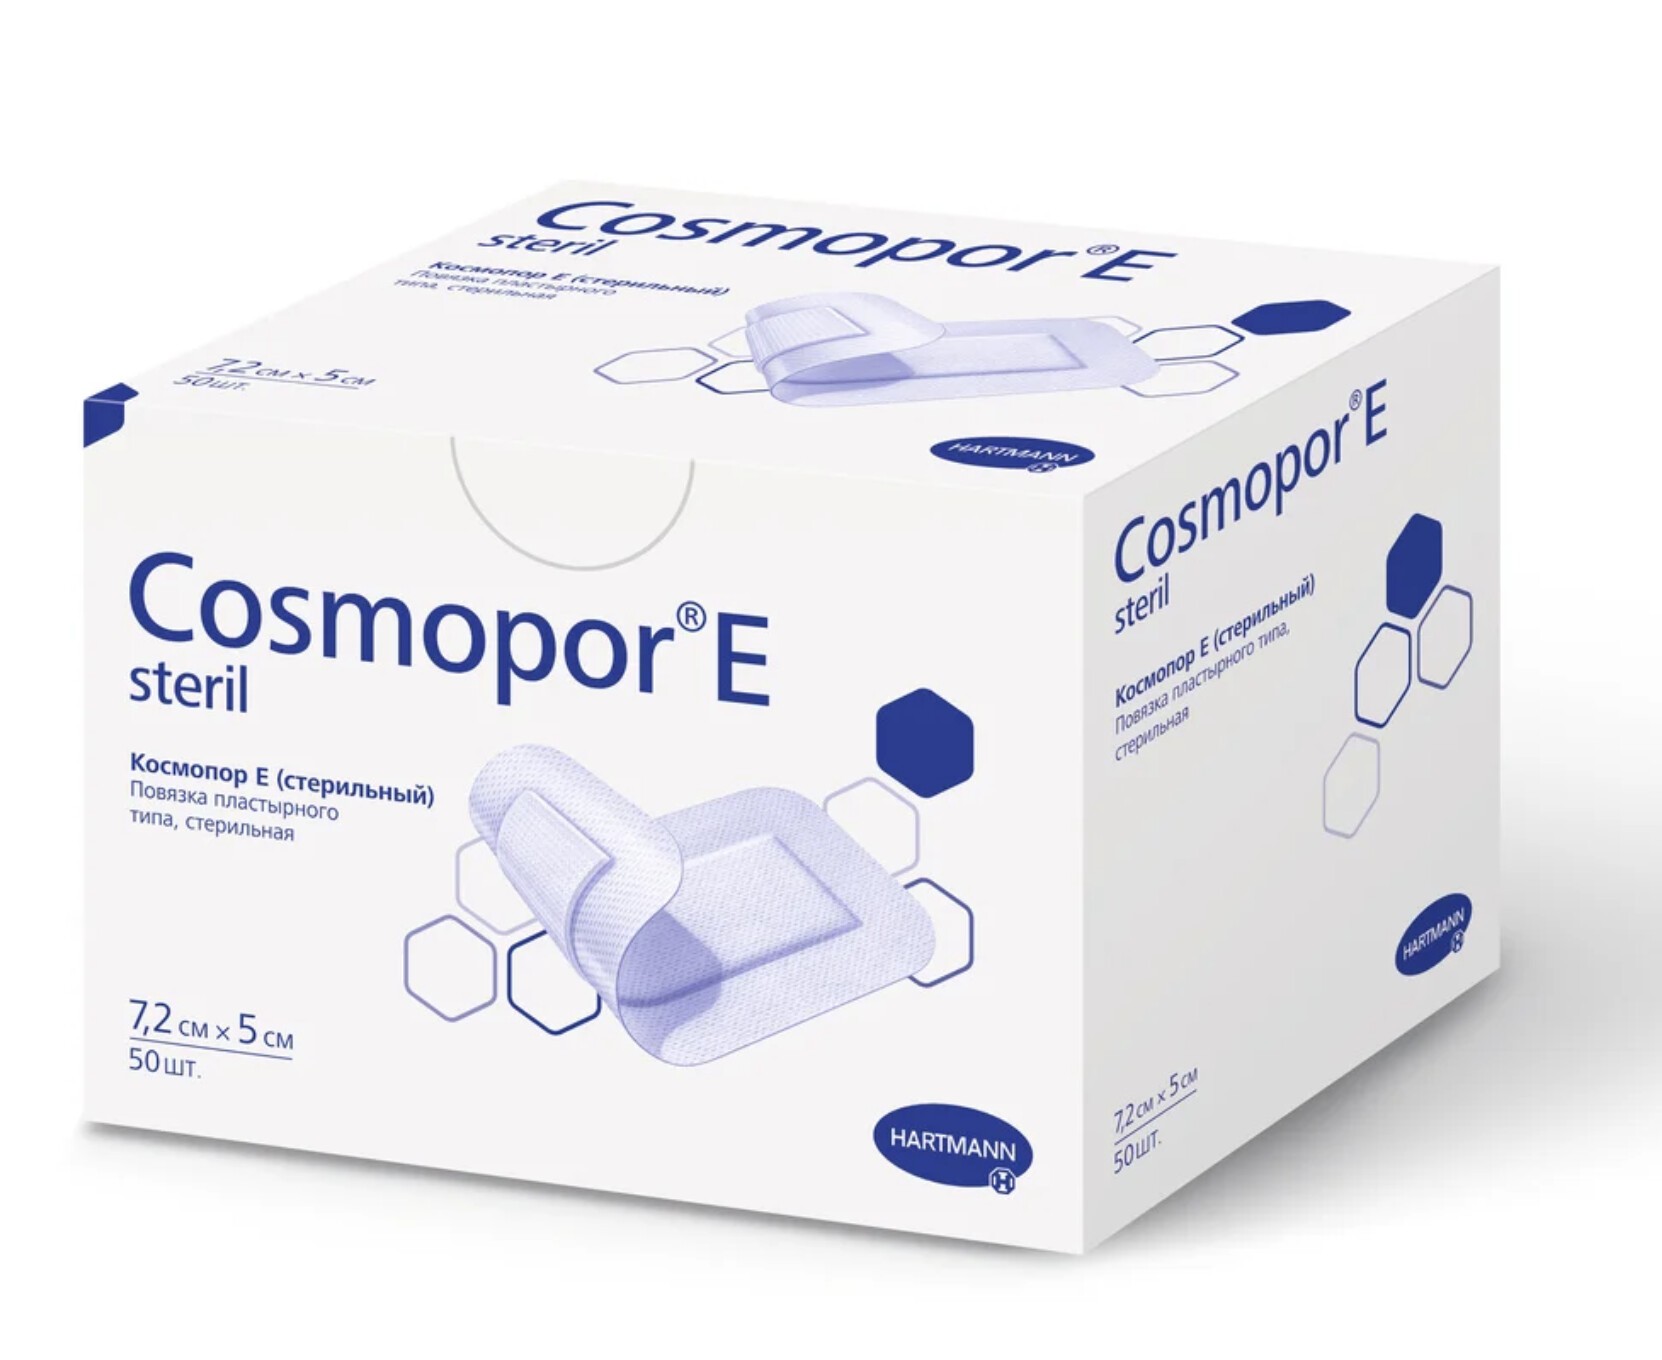 Cosmopor E sterile 7,2 cm x 5 cm